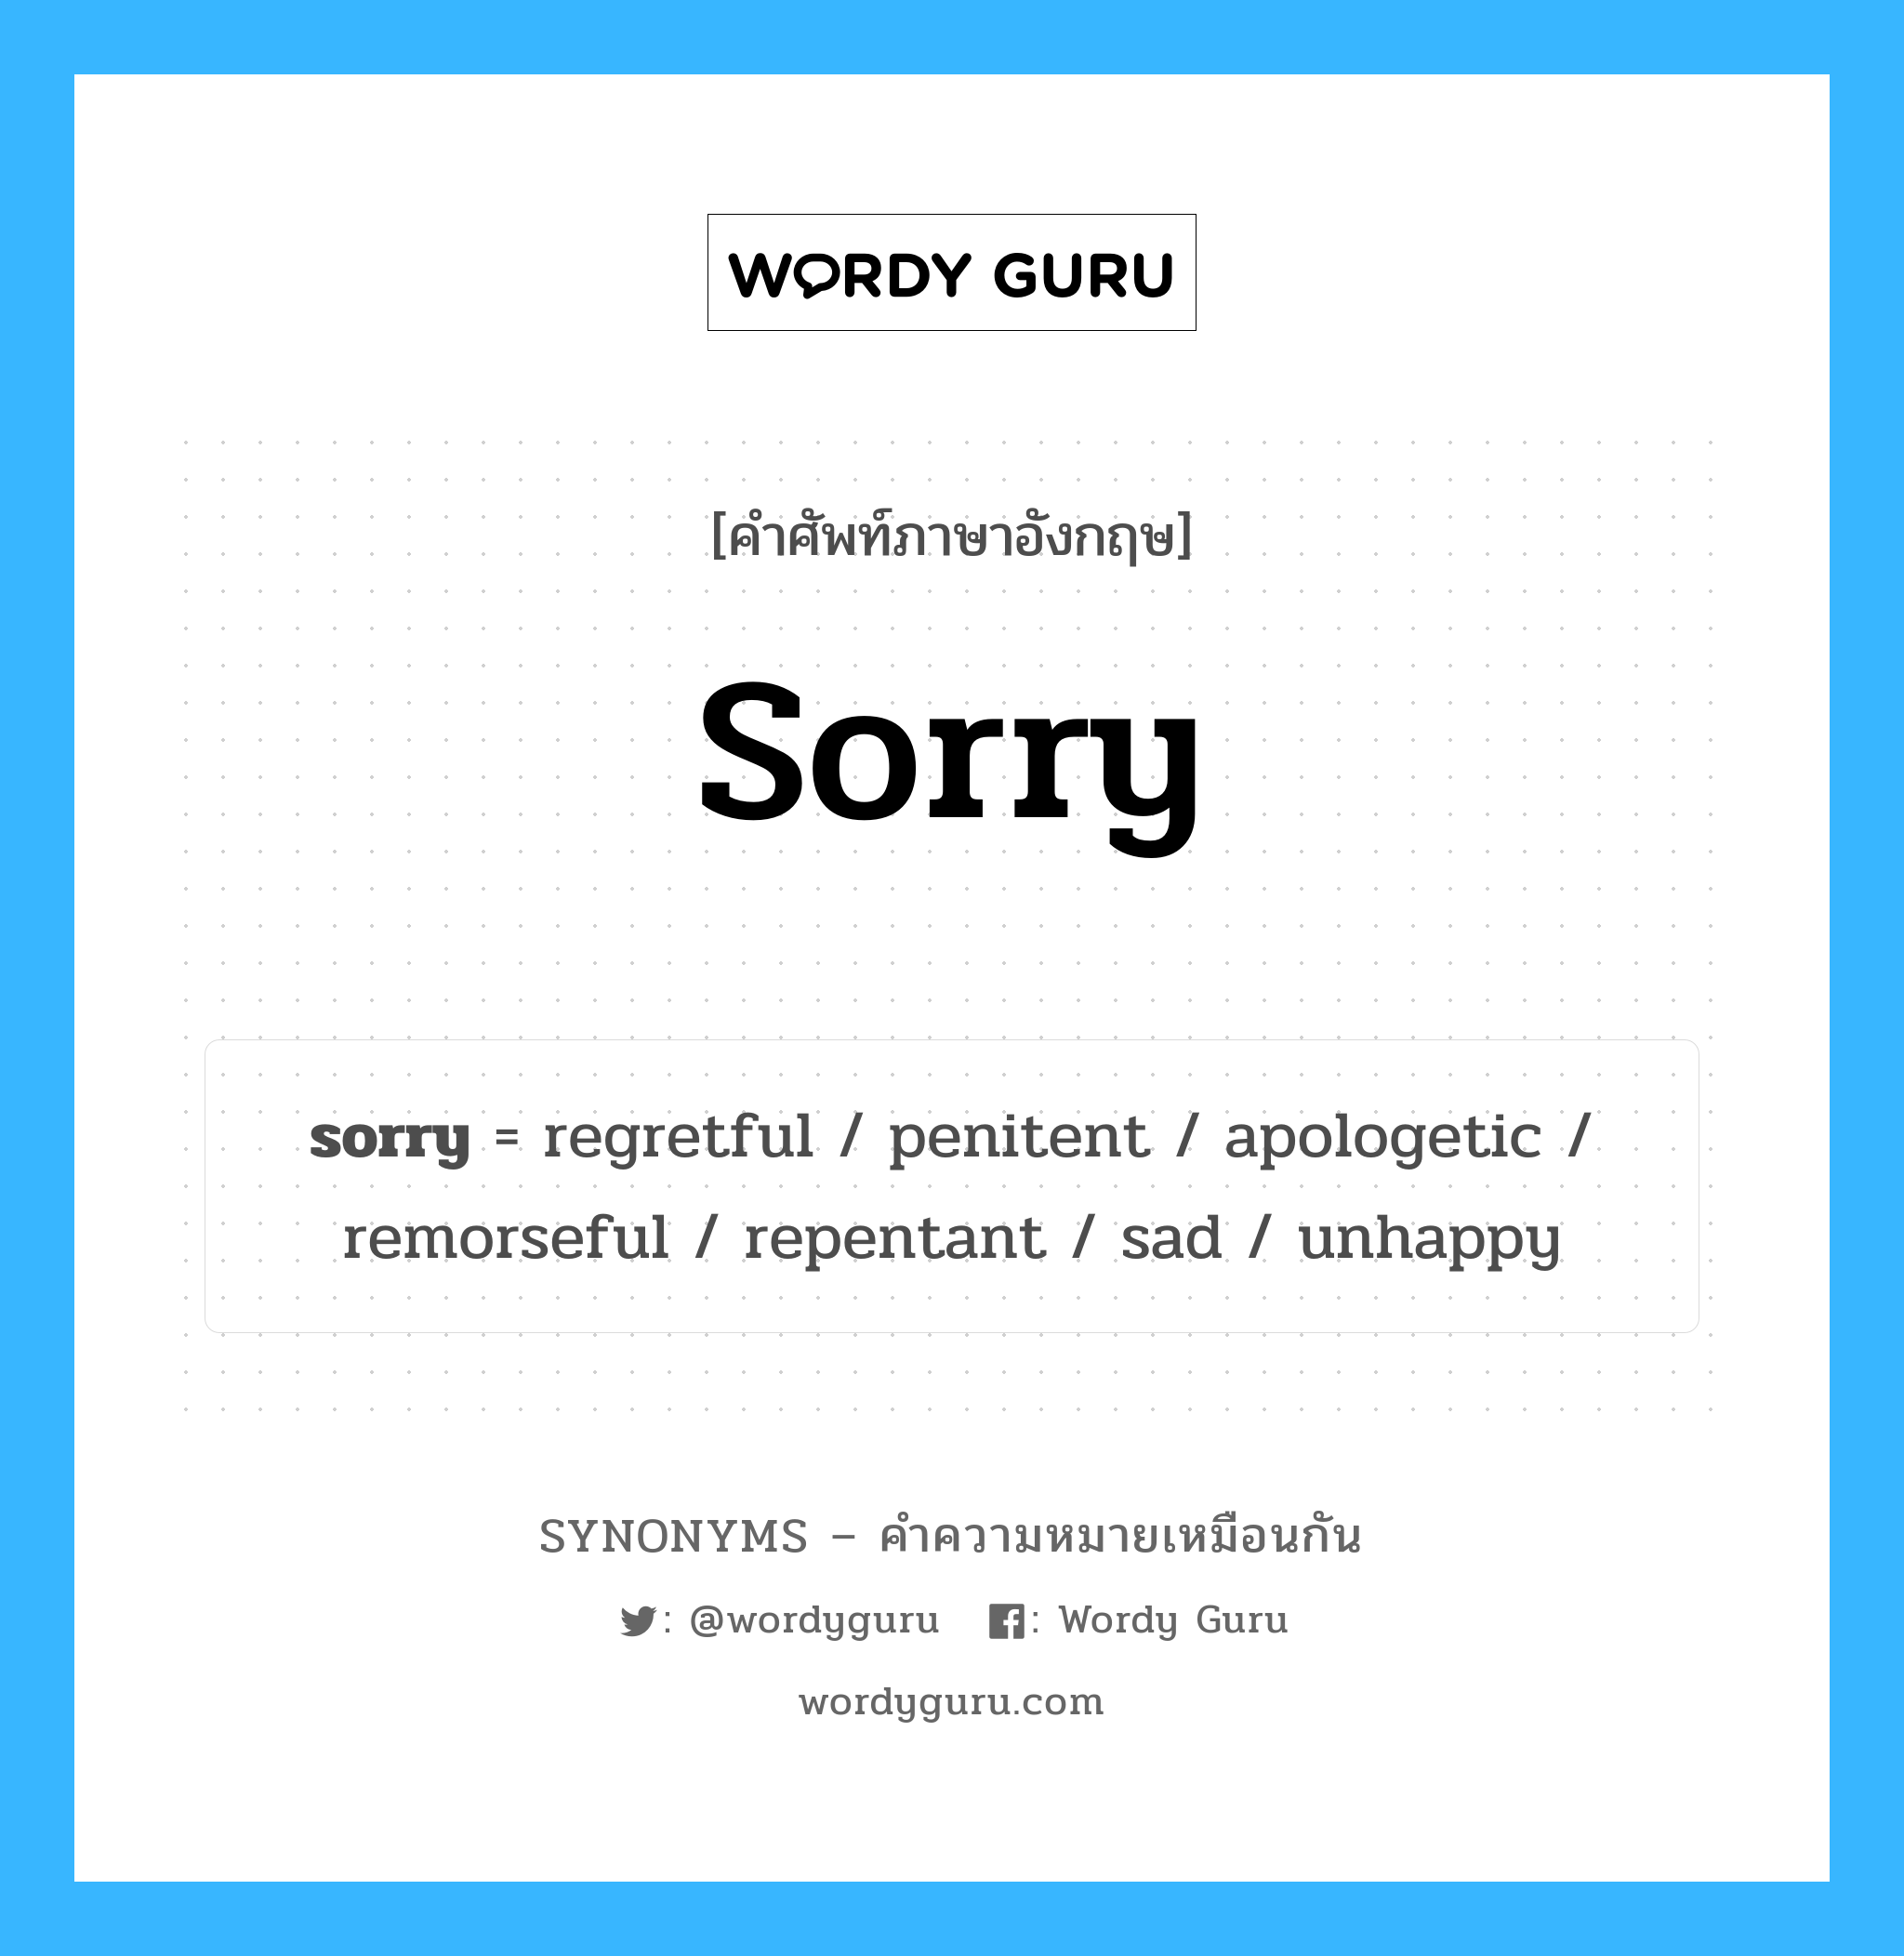 remorseful เป็นหนึ่งใน sorry และมีคำอื่น ๆ อีกดังนี้, คำศัพท์ภาษาอังกฤษ remorseful ความหมายคล้ายกันกับ sorry แปลว่า ภาย หมวด sorry